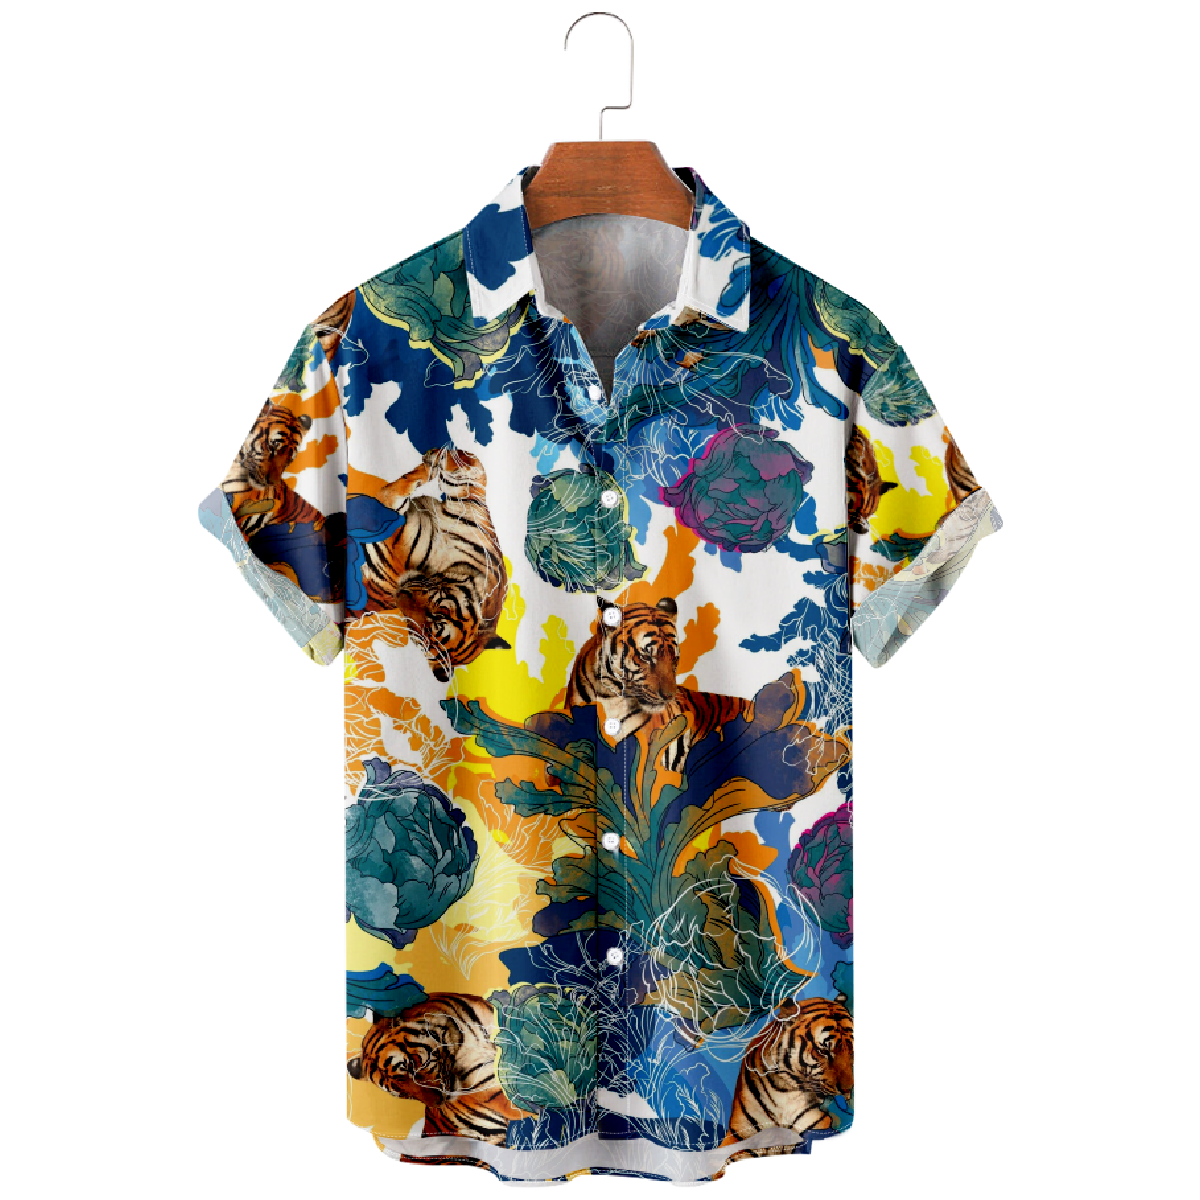 Tiger and Flower Graphic Print Button Up Shirt Men's Short Sleeve Shirt Casual Shirt 